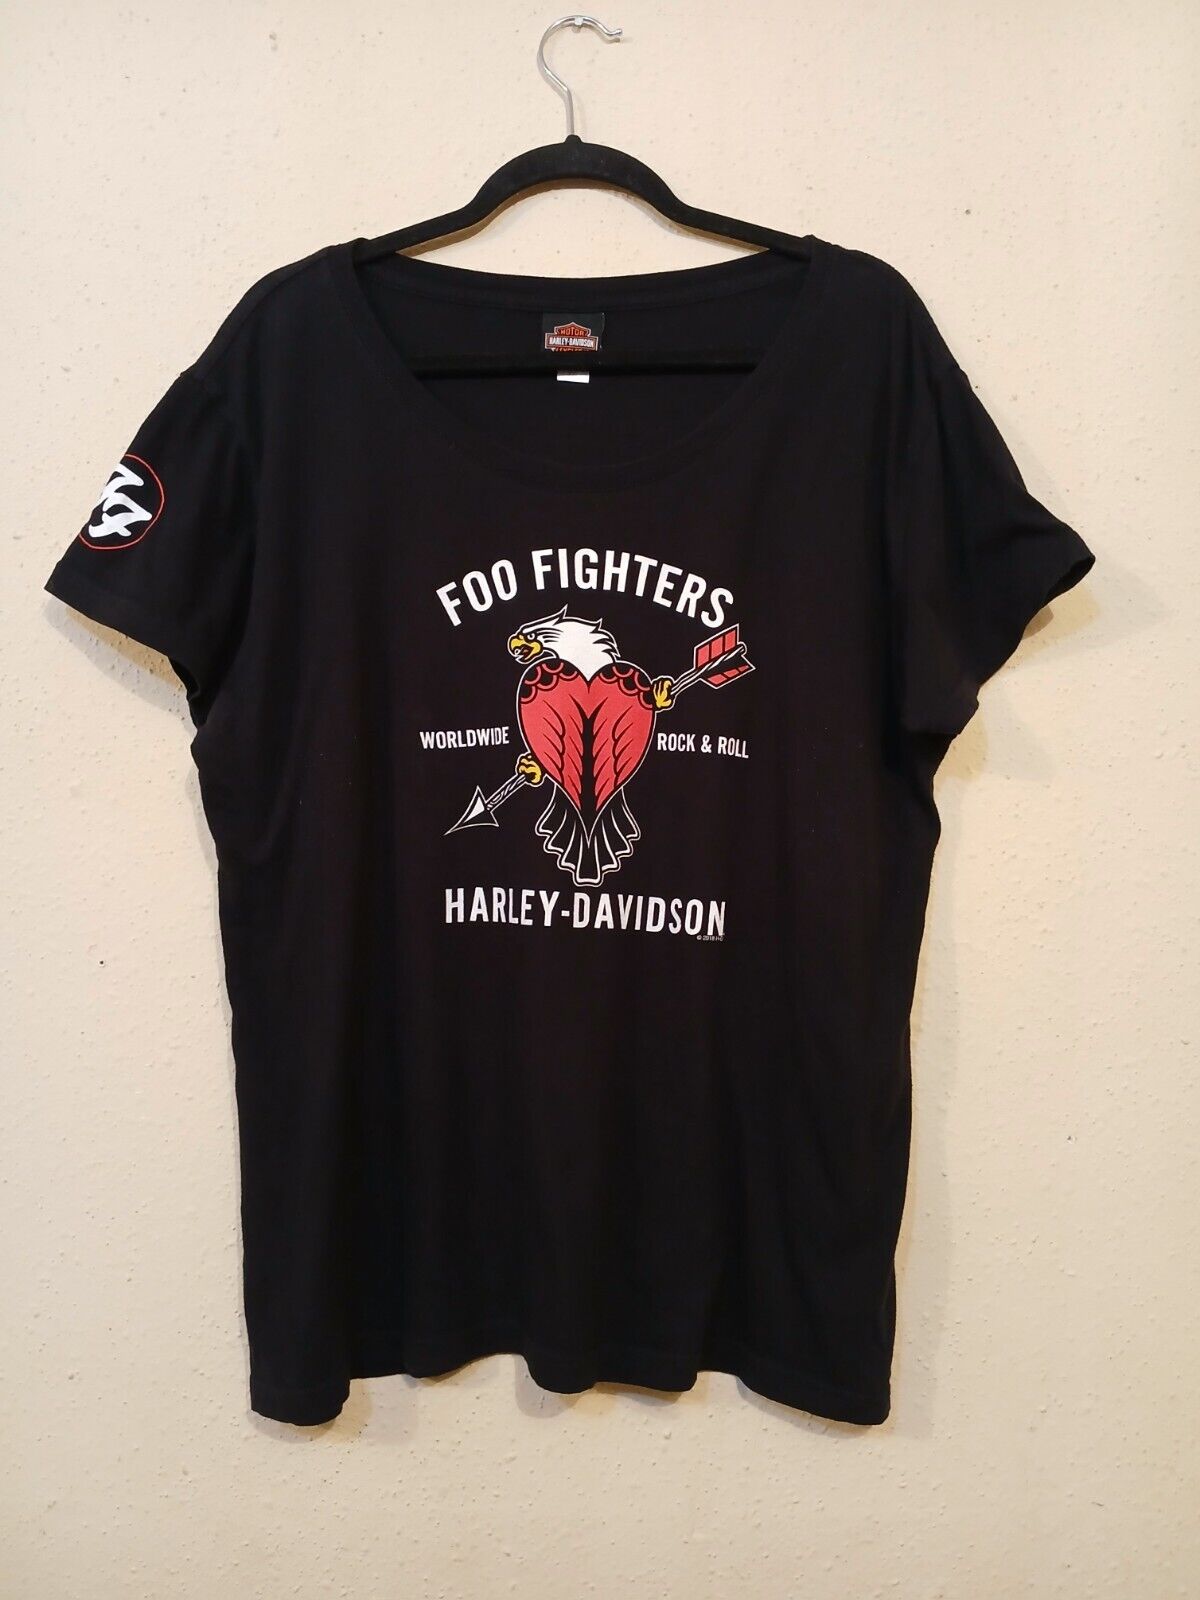 Harley Davidson X Foo Fighters Shirt Womens Plus Size 2XL XXL Limited Edition